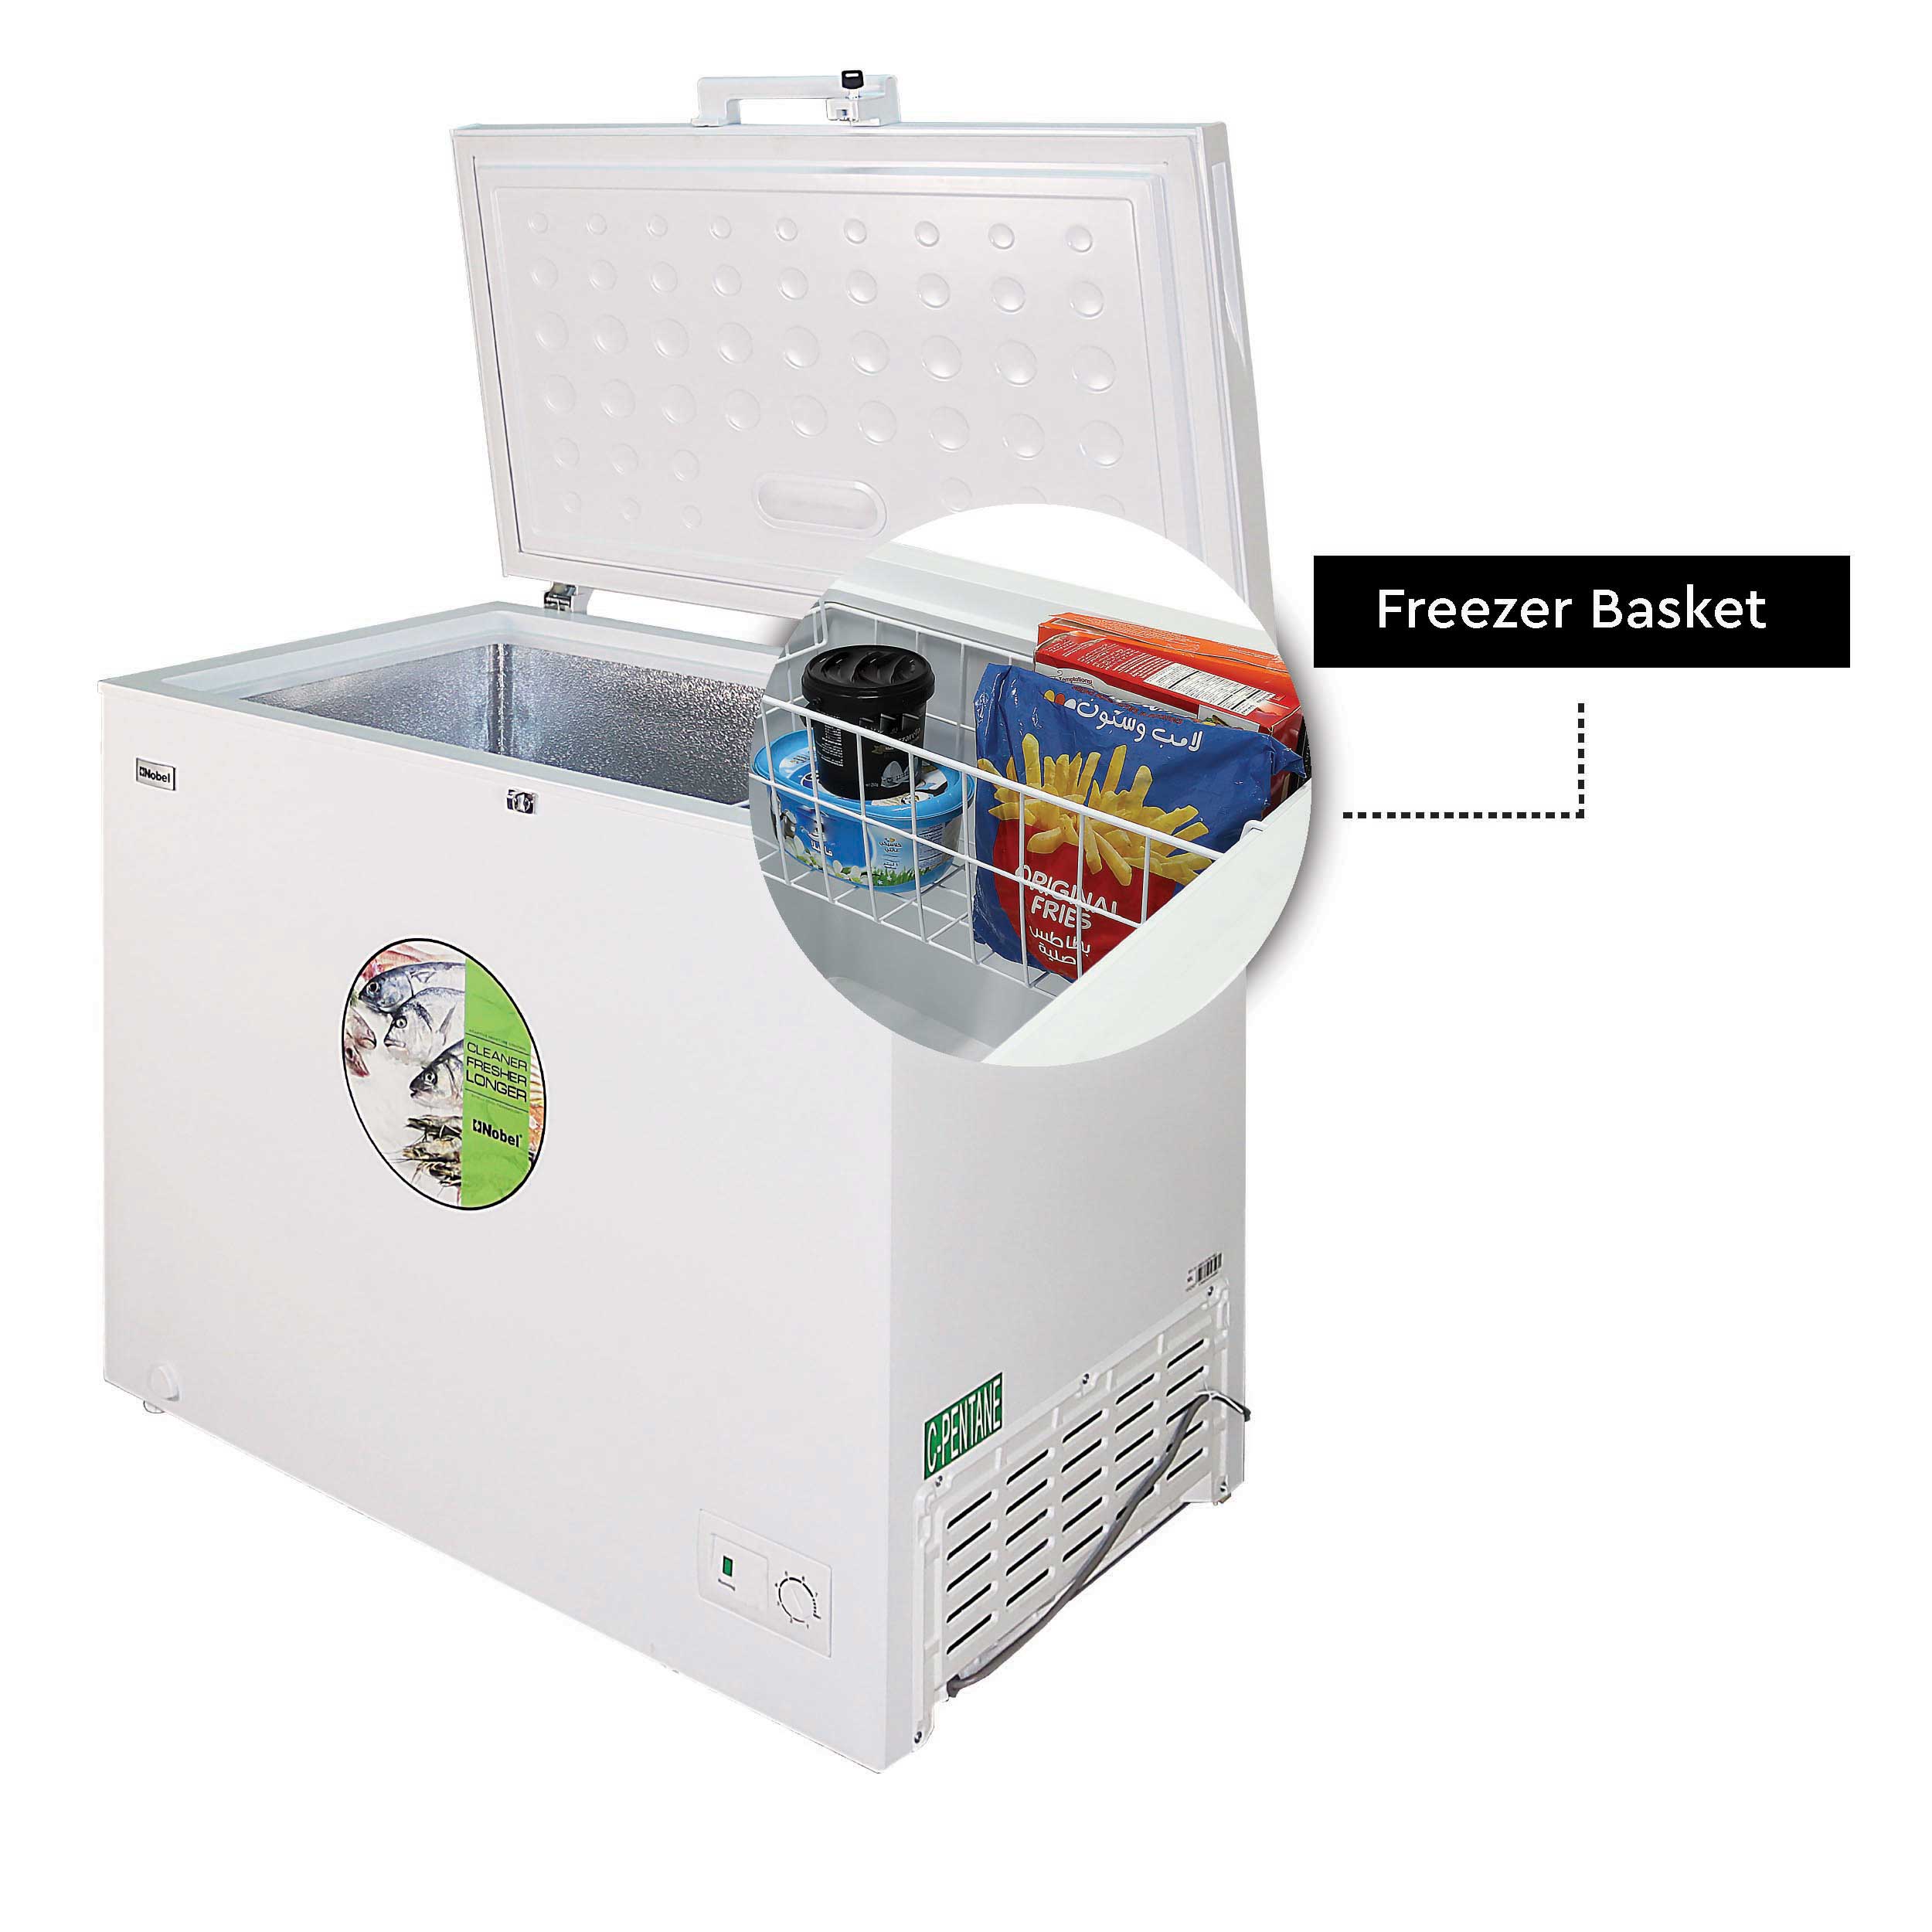 Nobel Chest Freezer 251 Litres, White - NCF300